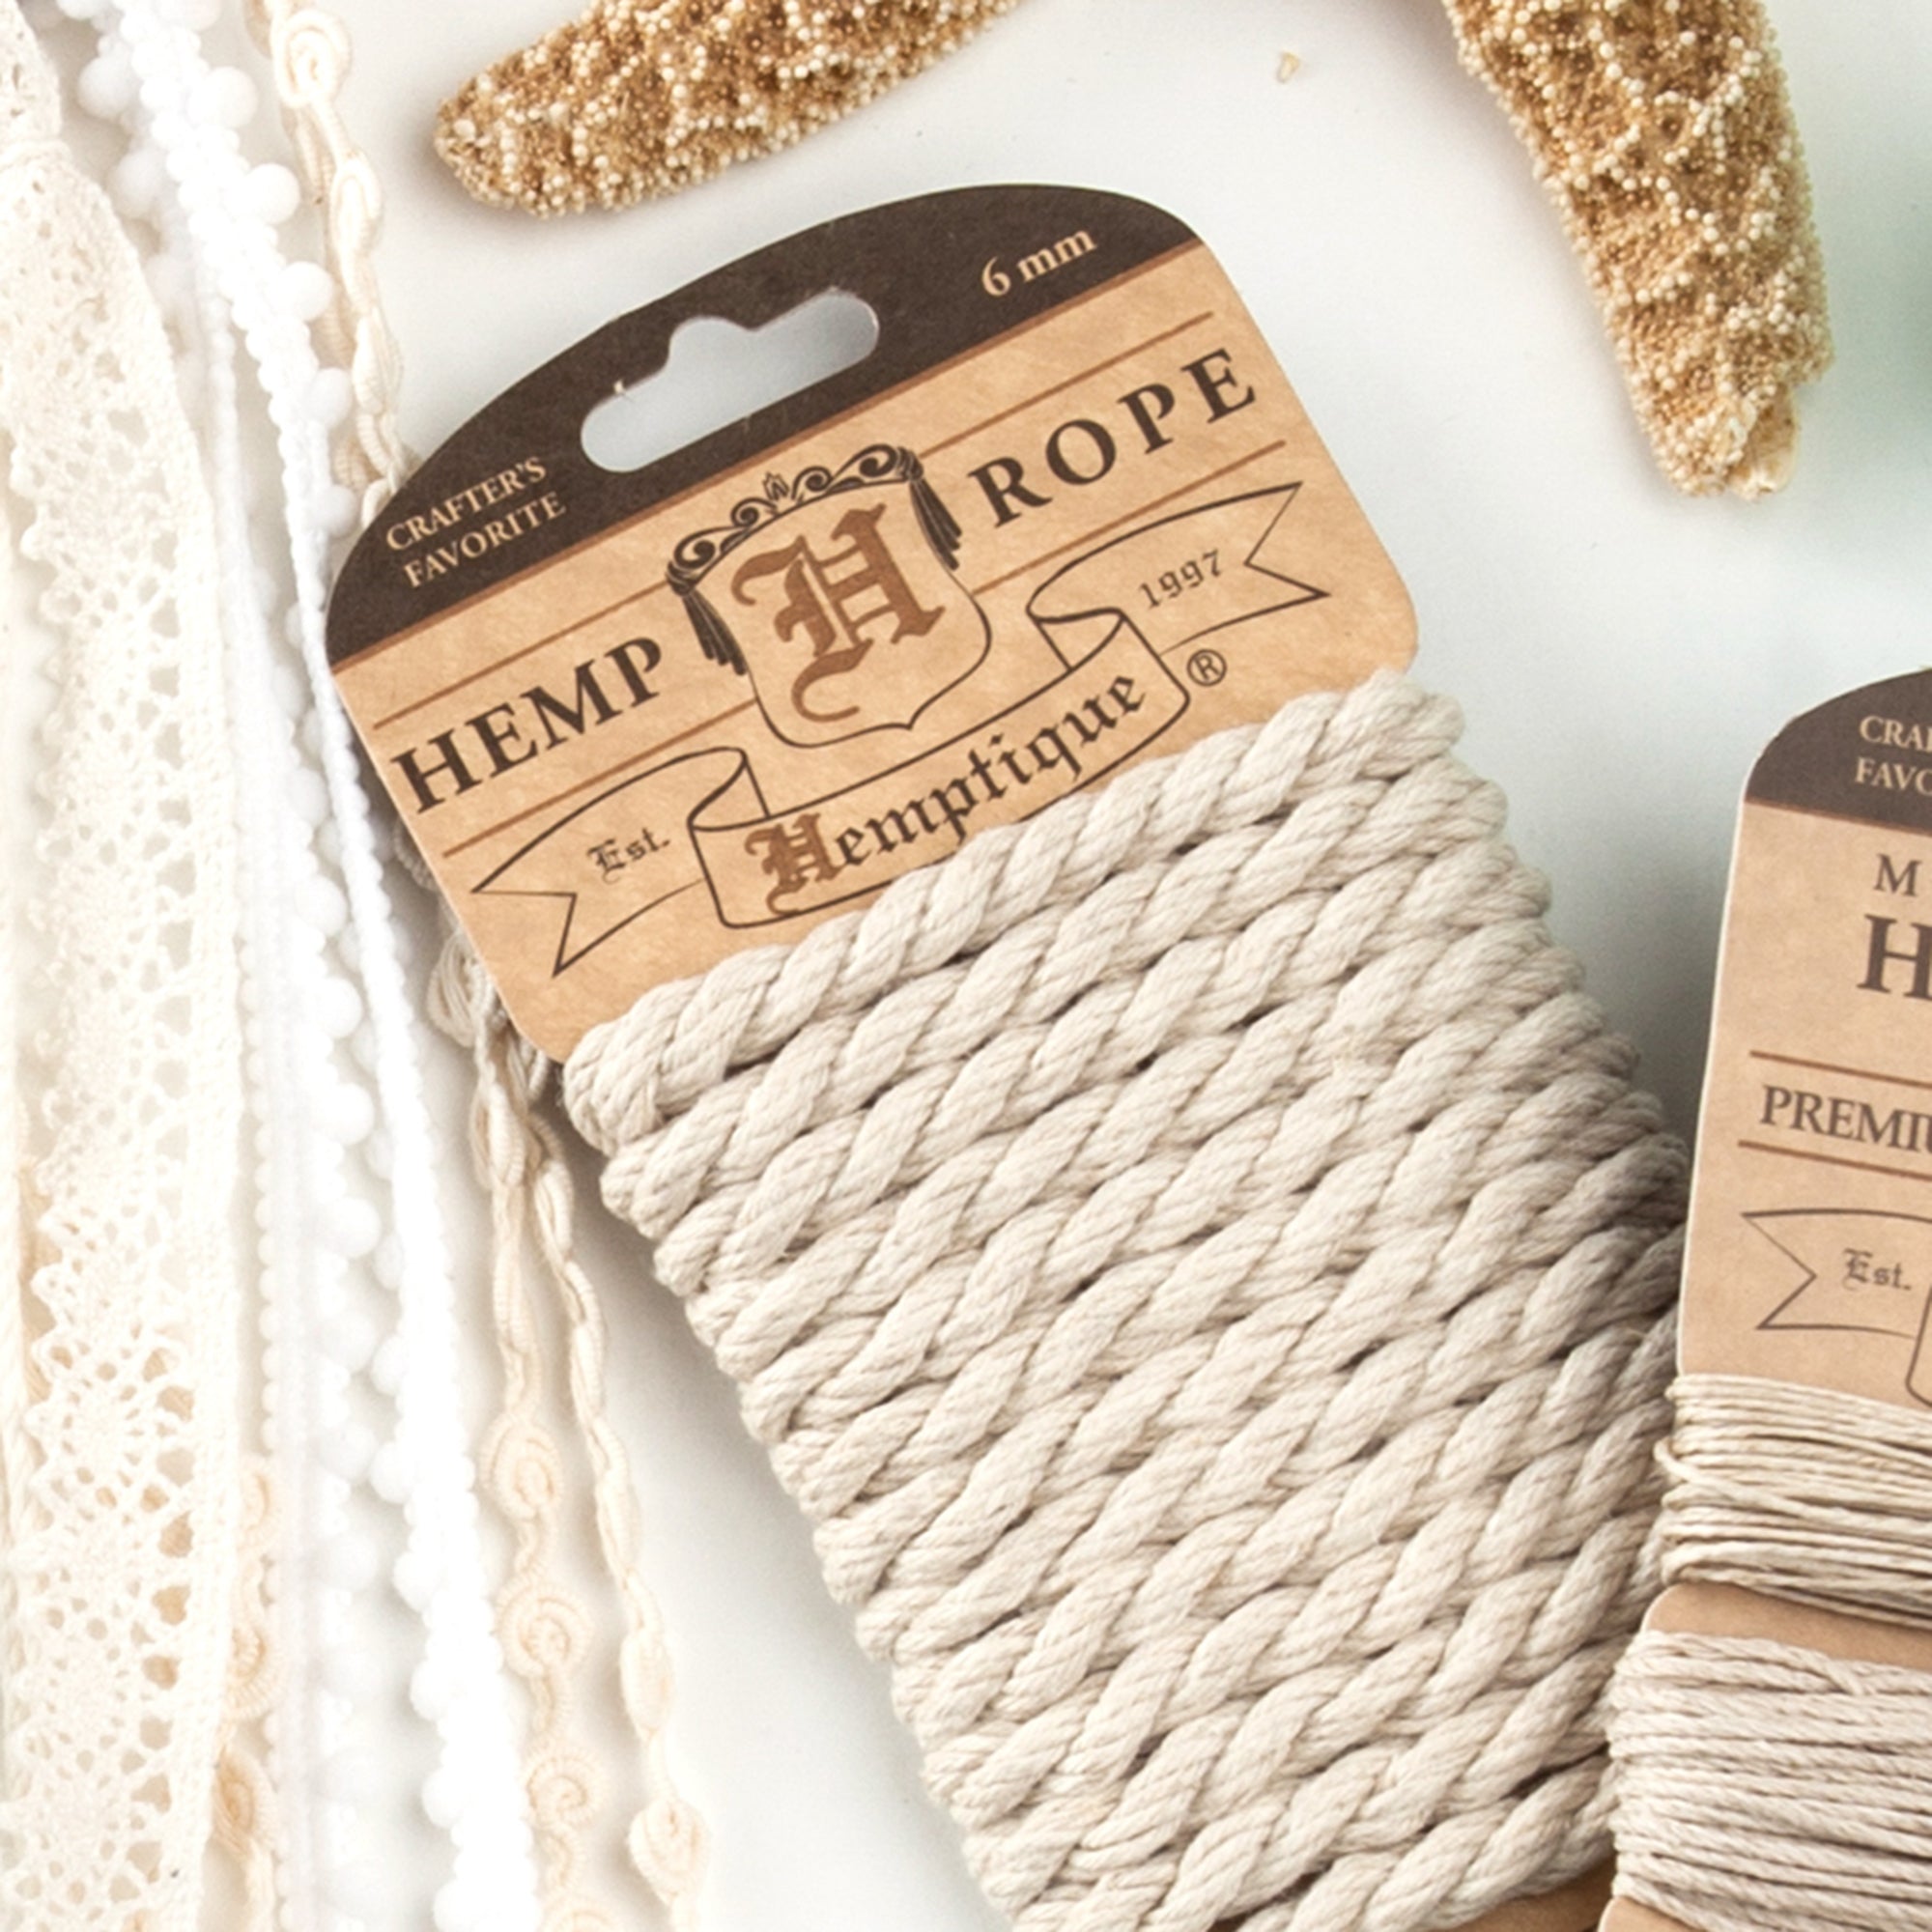 Hemp Rope Cards - Braided & Twisted Craft Rope - Hemptique